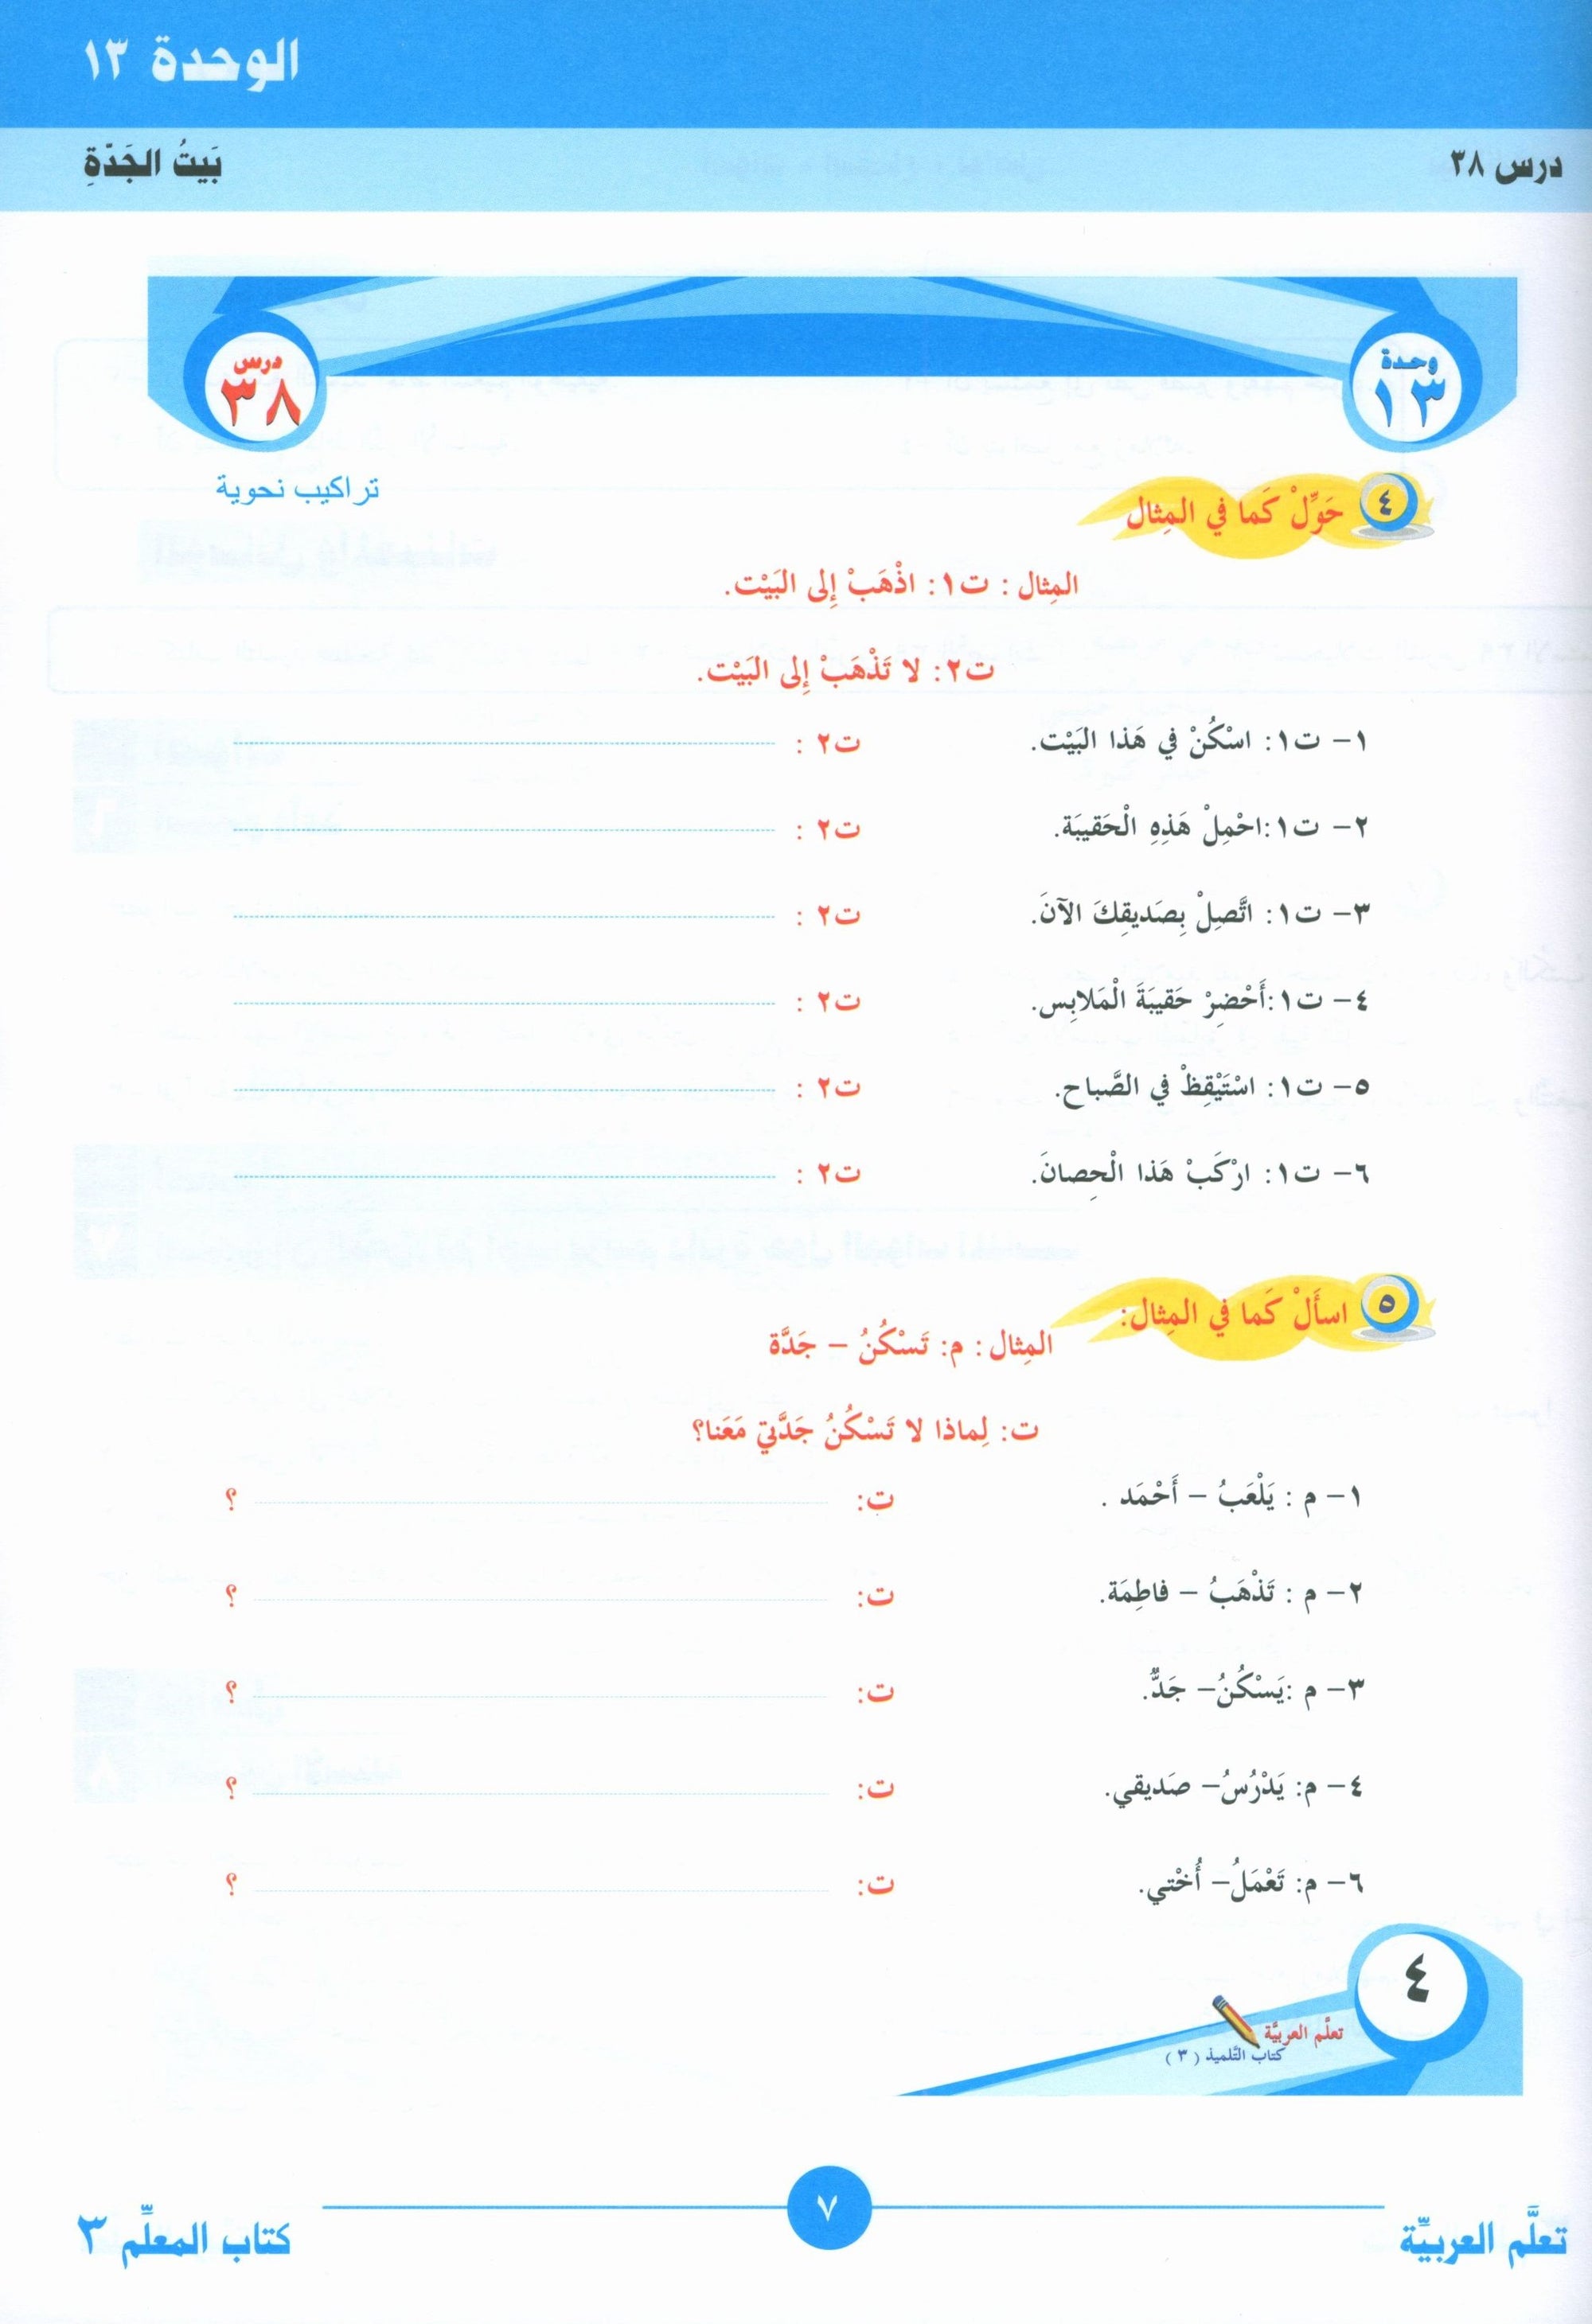 ICO Learn Arabic Teacher Book Level 3 Part 2 تعلم العربية كتاب المعلم